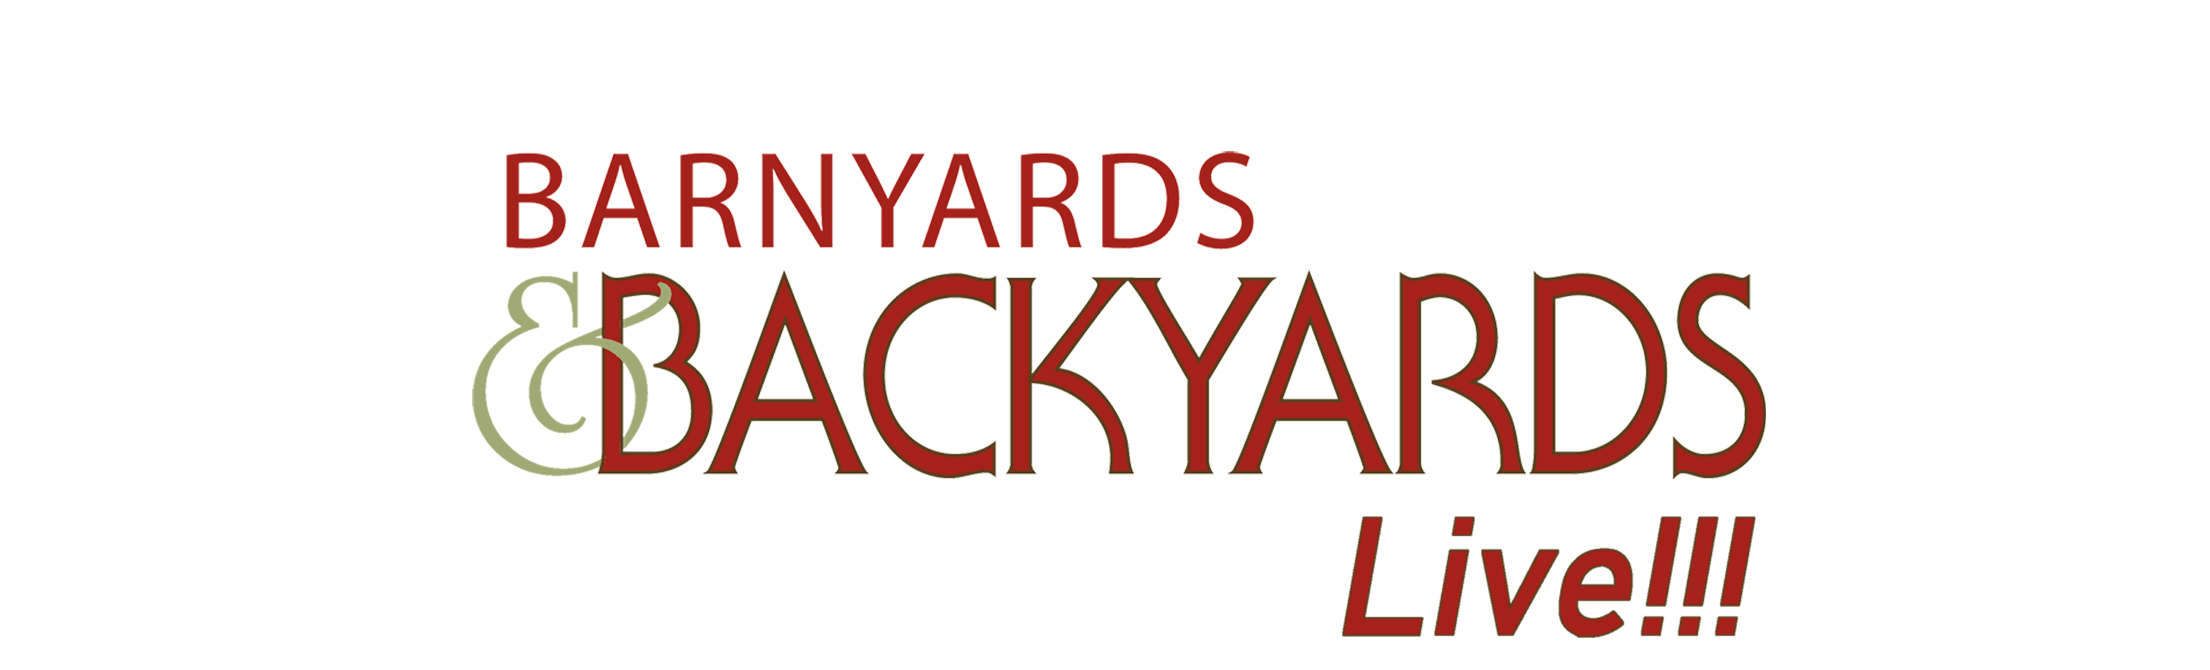 Barnyards & Backyards Live!!! logo